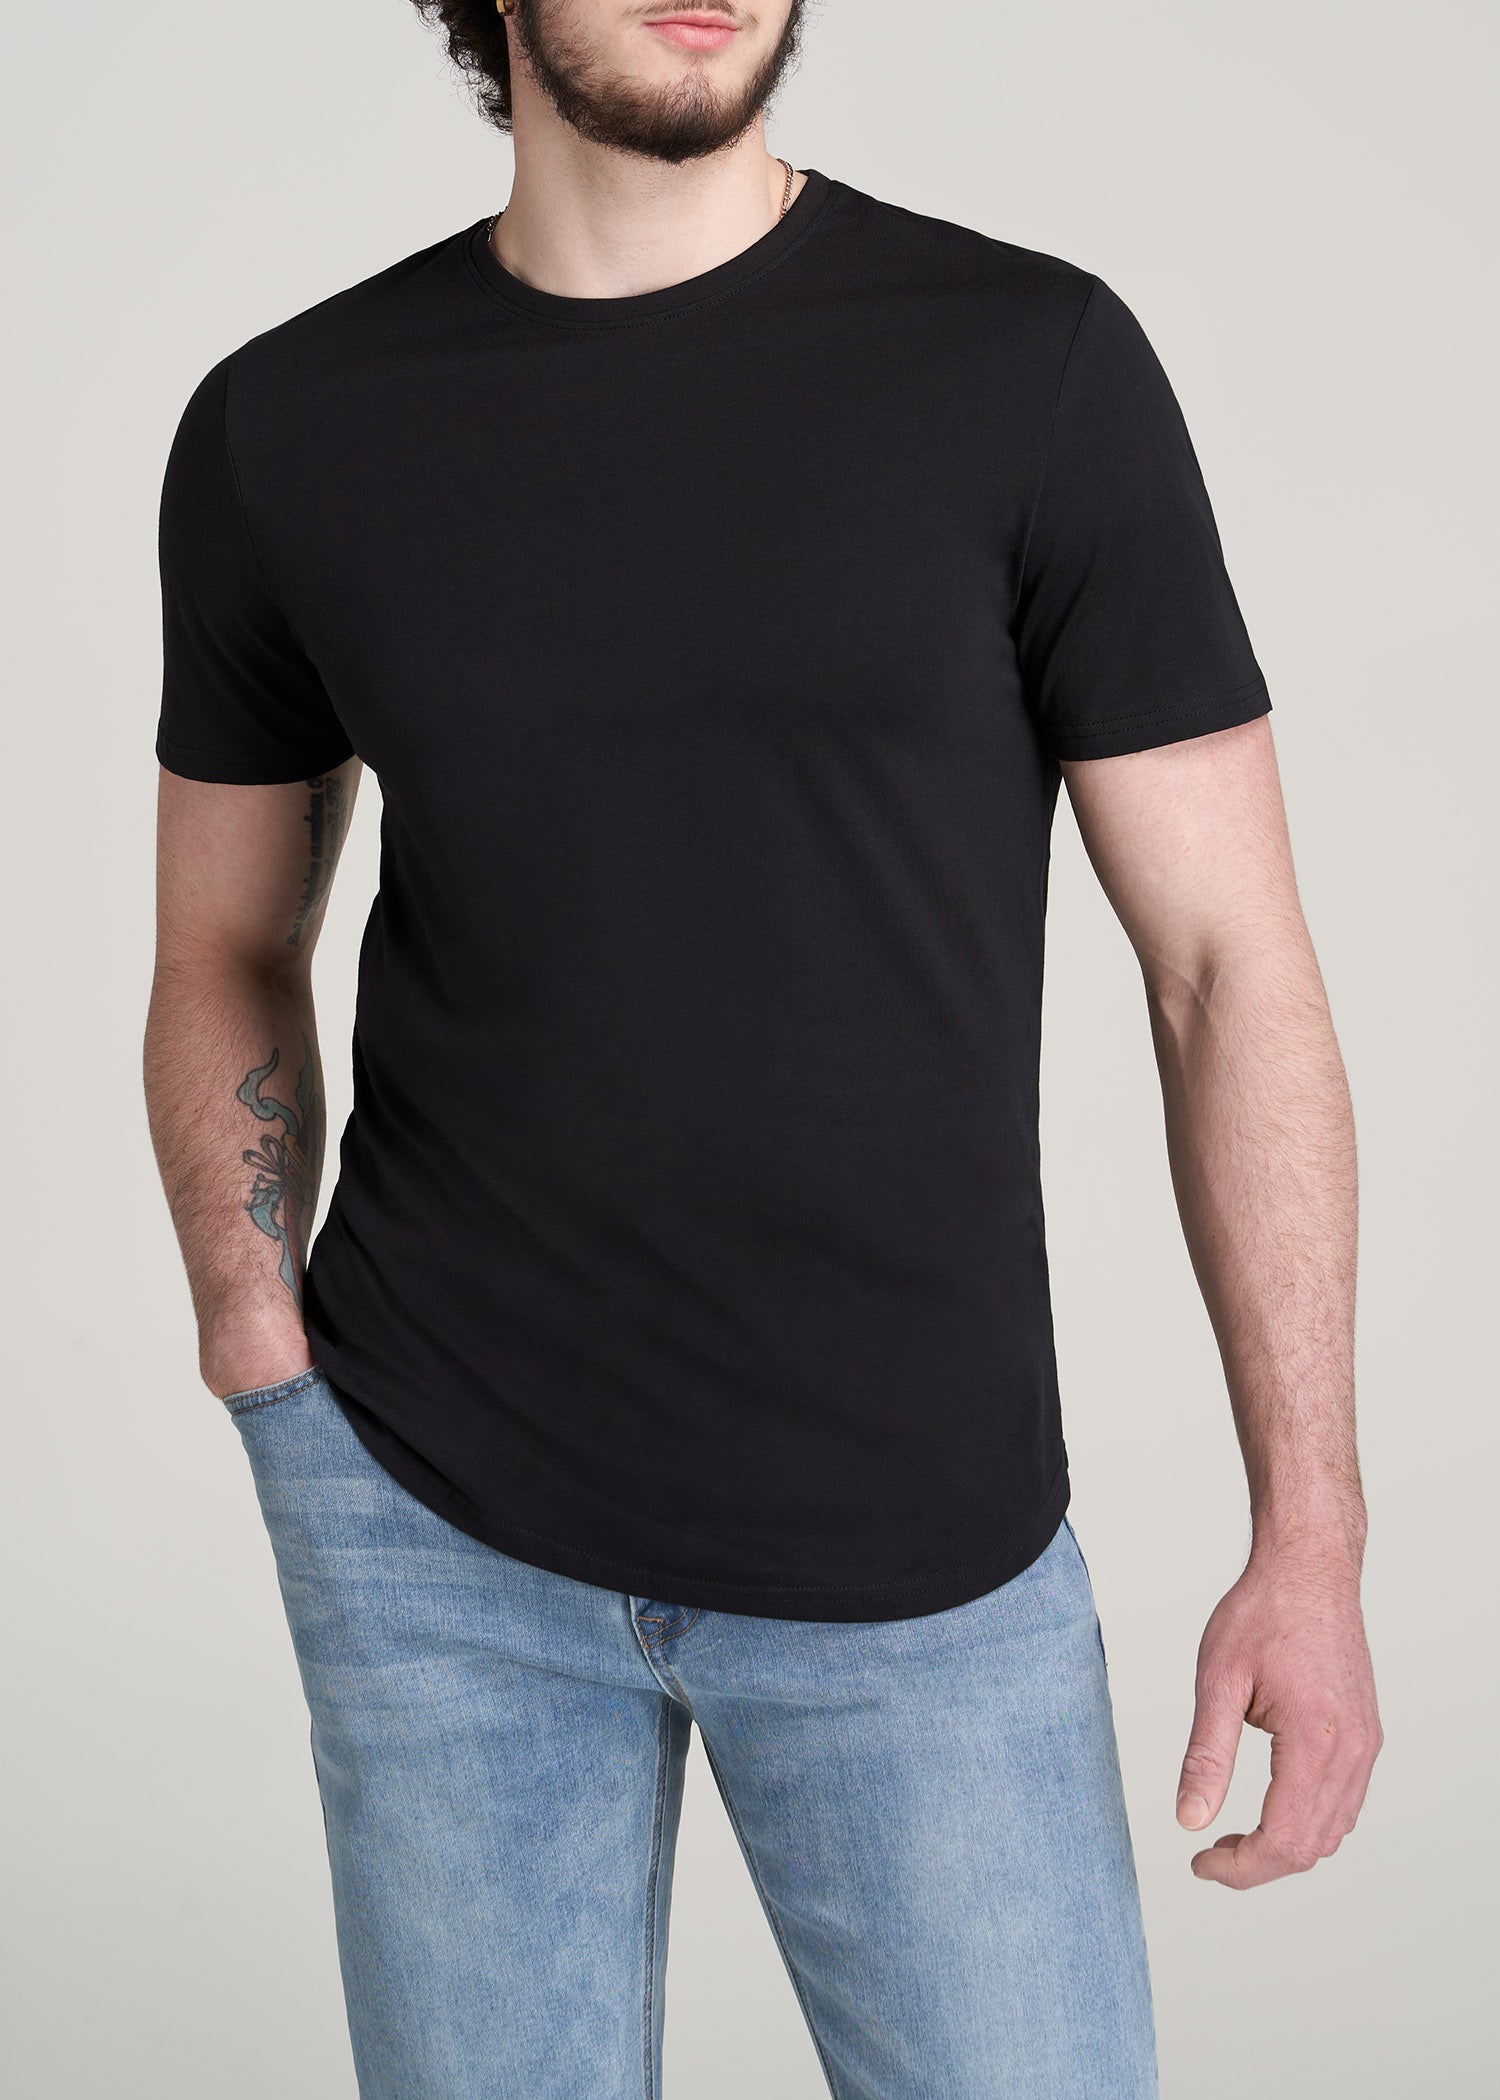 Scoop Neck T-shirts Mens: Men's Tall Bottom Black Tees